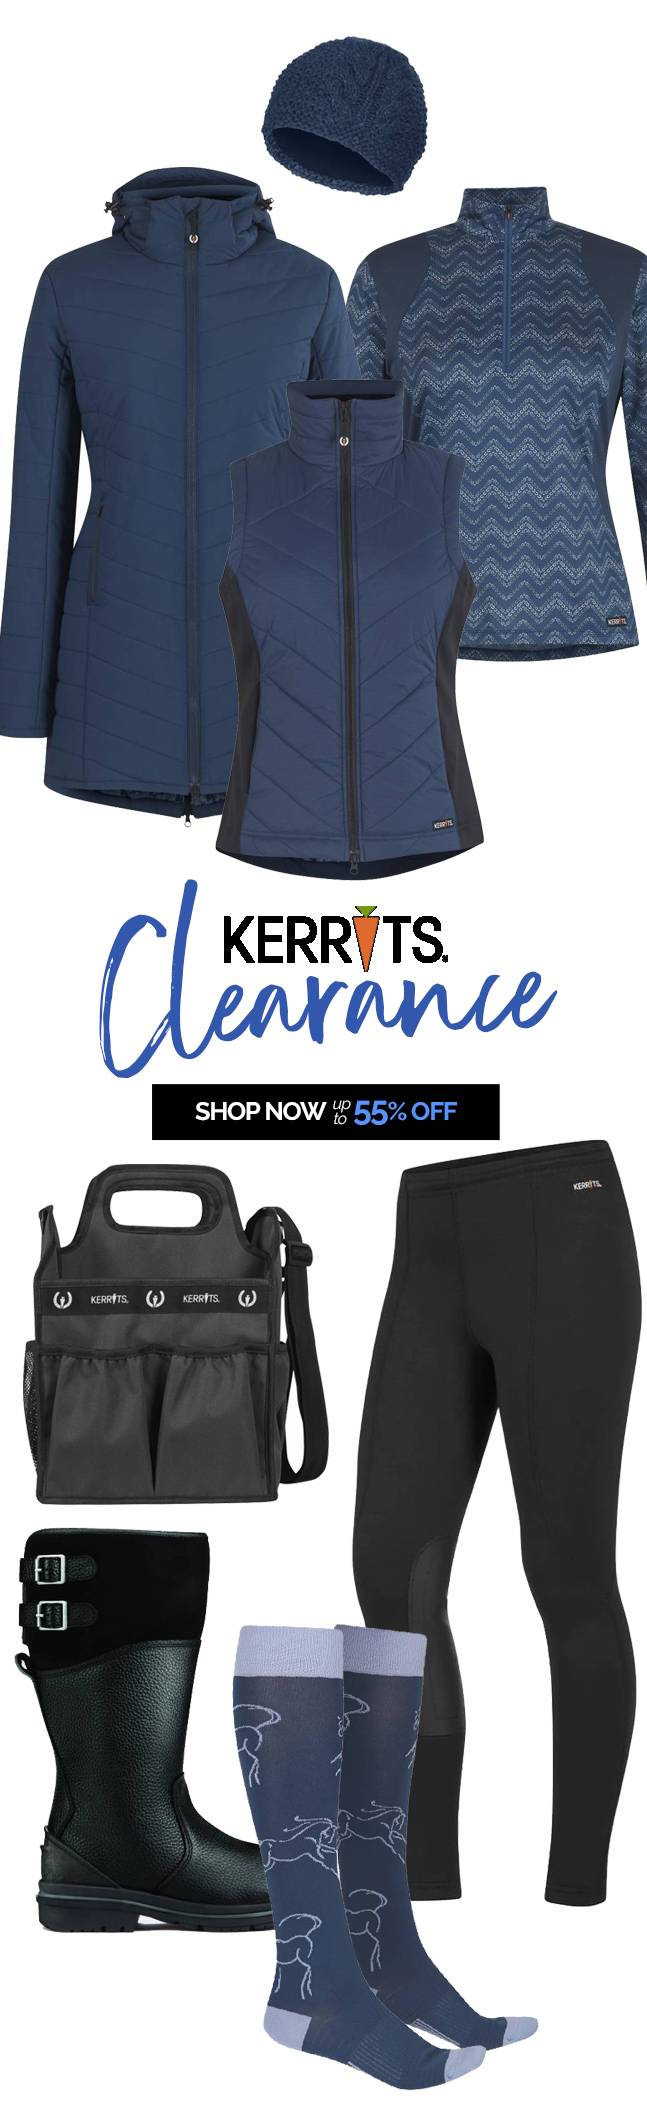 Kerrits Seasonal Clearance Up to 55% OFF